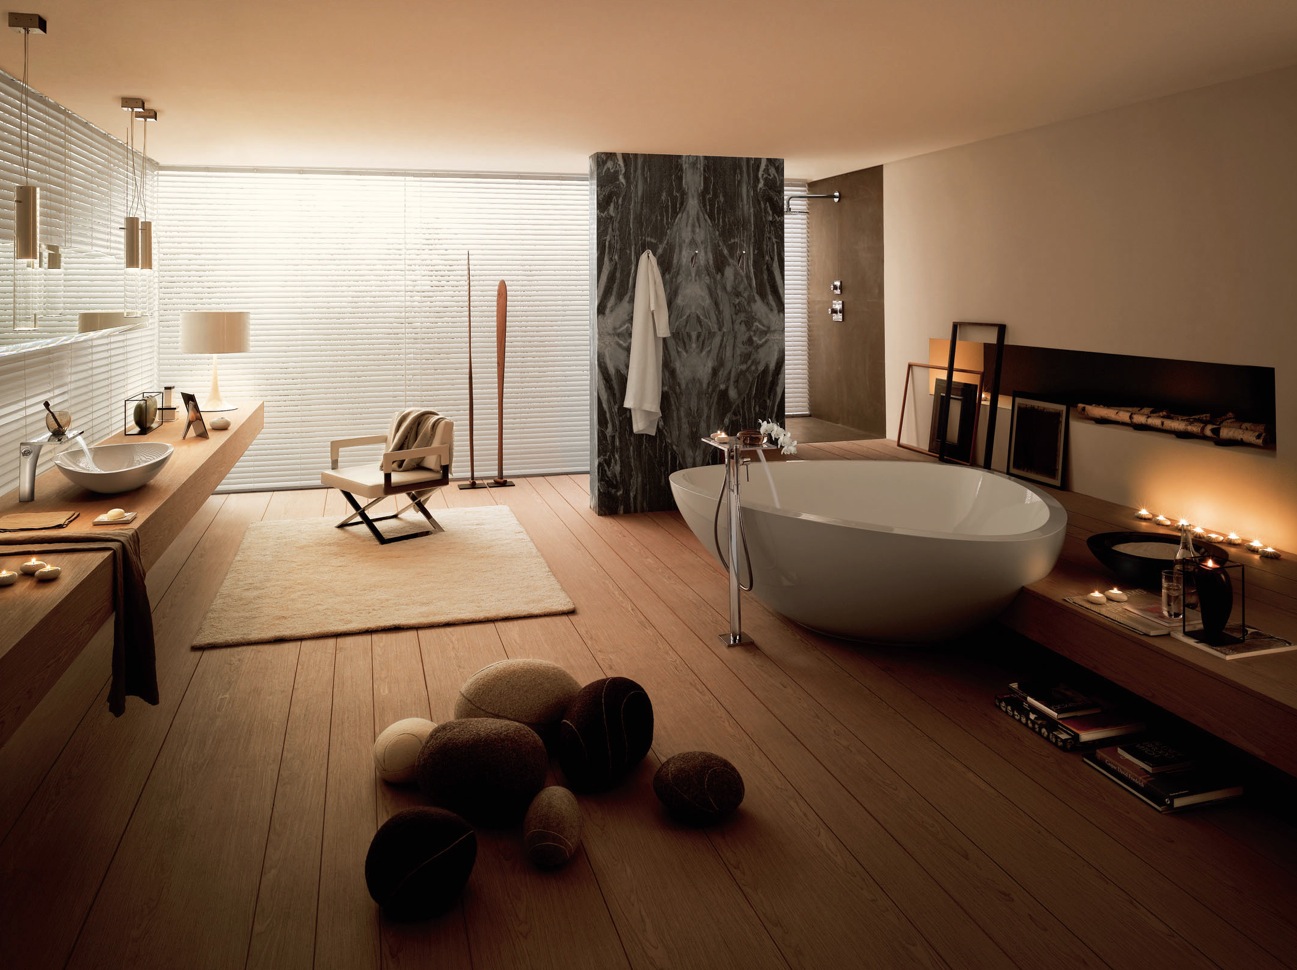 Bathroom-Design-with-Modern-Bath-Tub-Little-Stone-Chair-Fur-Carpet-Art-Door-Unique-Lamp-Laminated-Long-Table-and-Floor